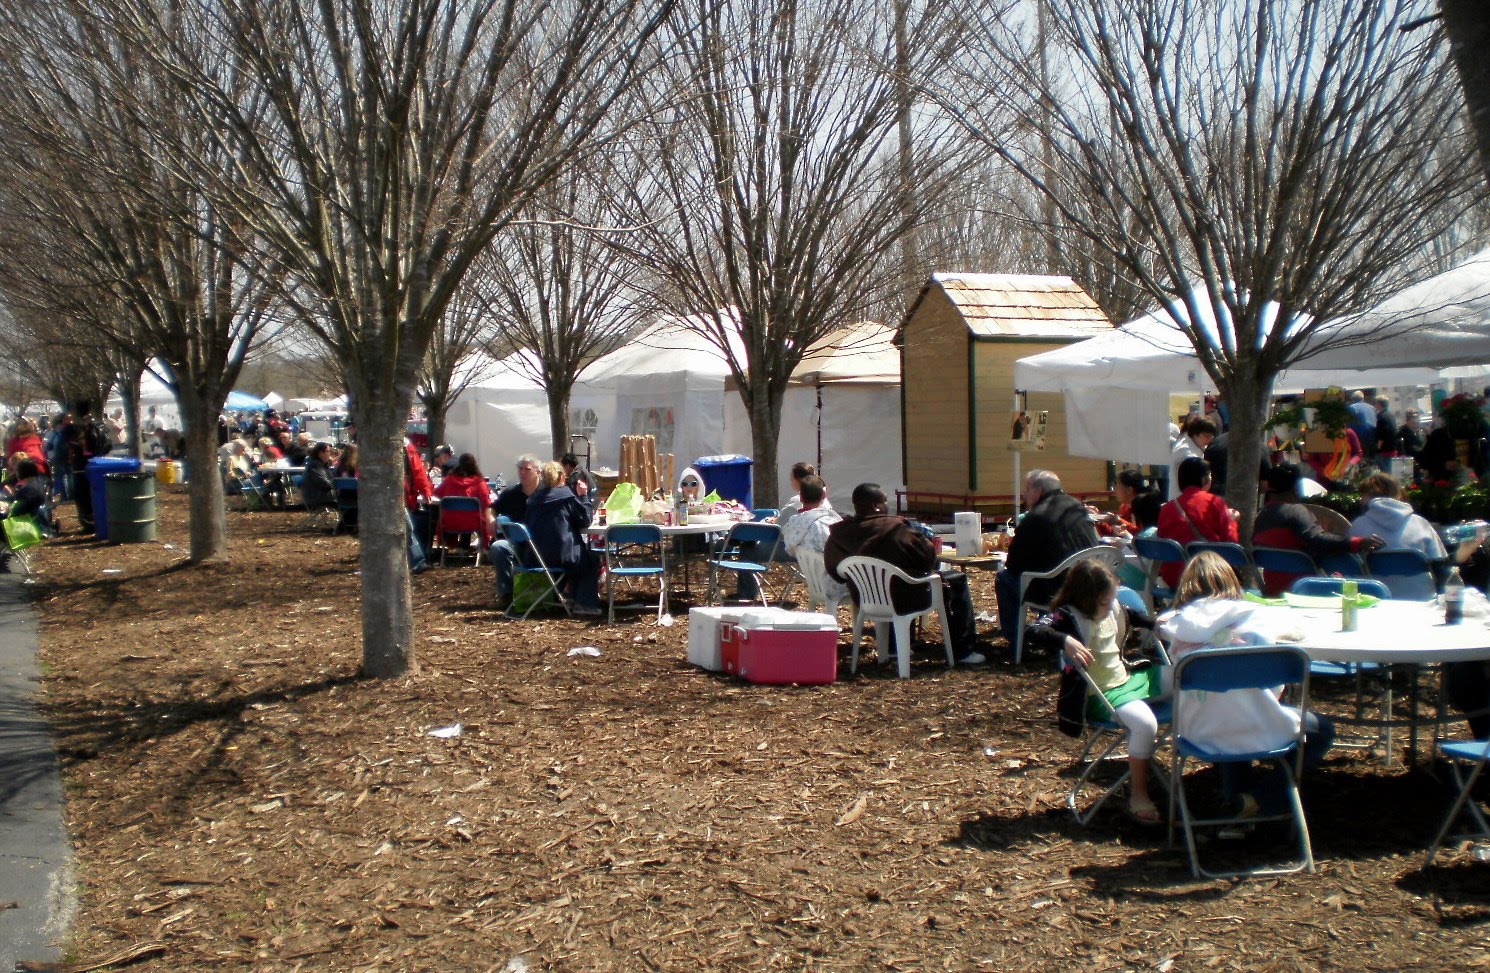 RamblerTrek Cherry Blossom Festival, Conyers, GA; Saturday, March 27, 2010